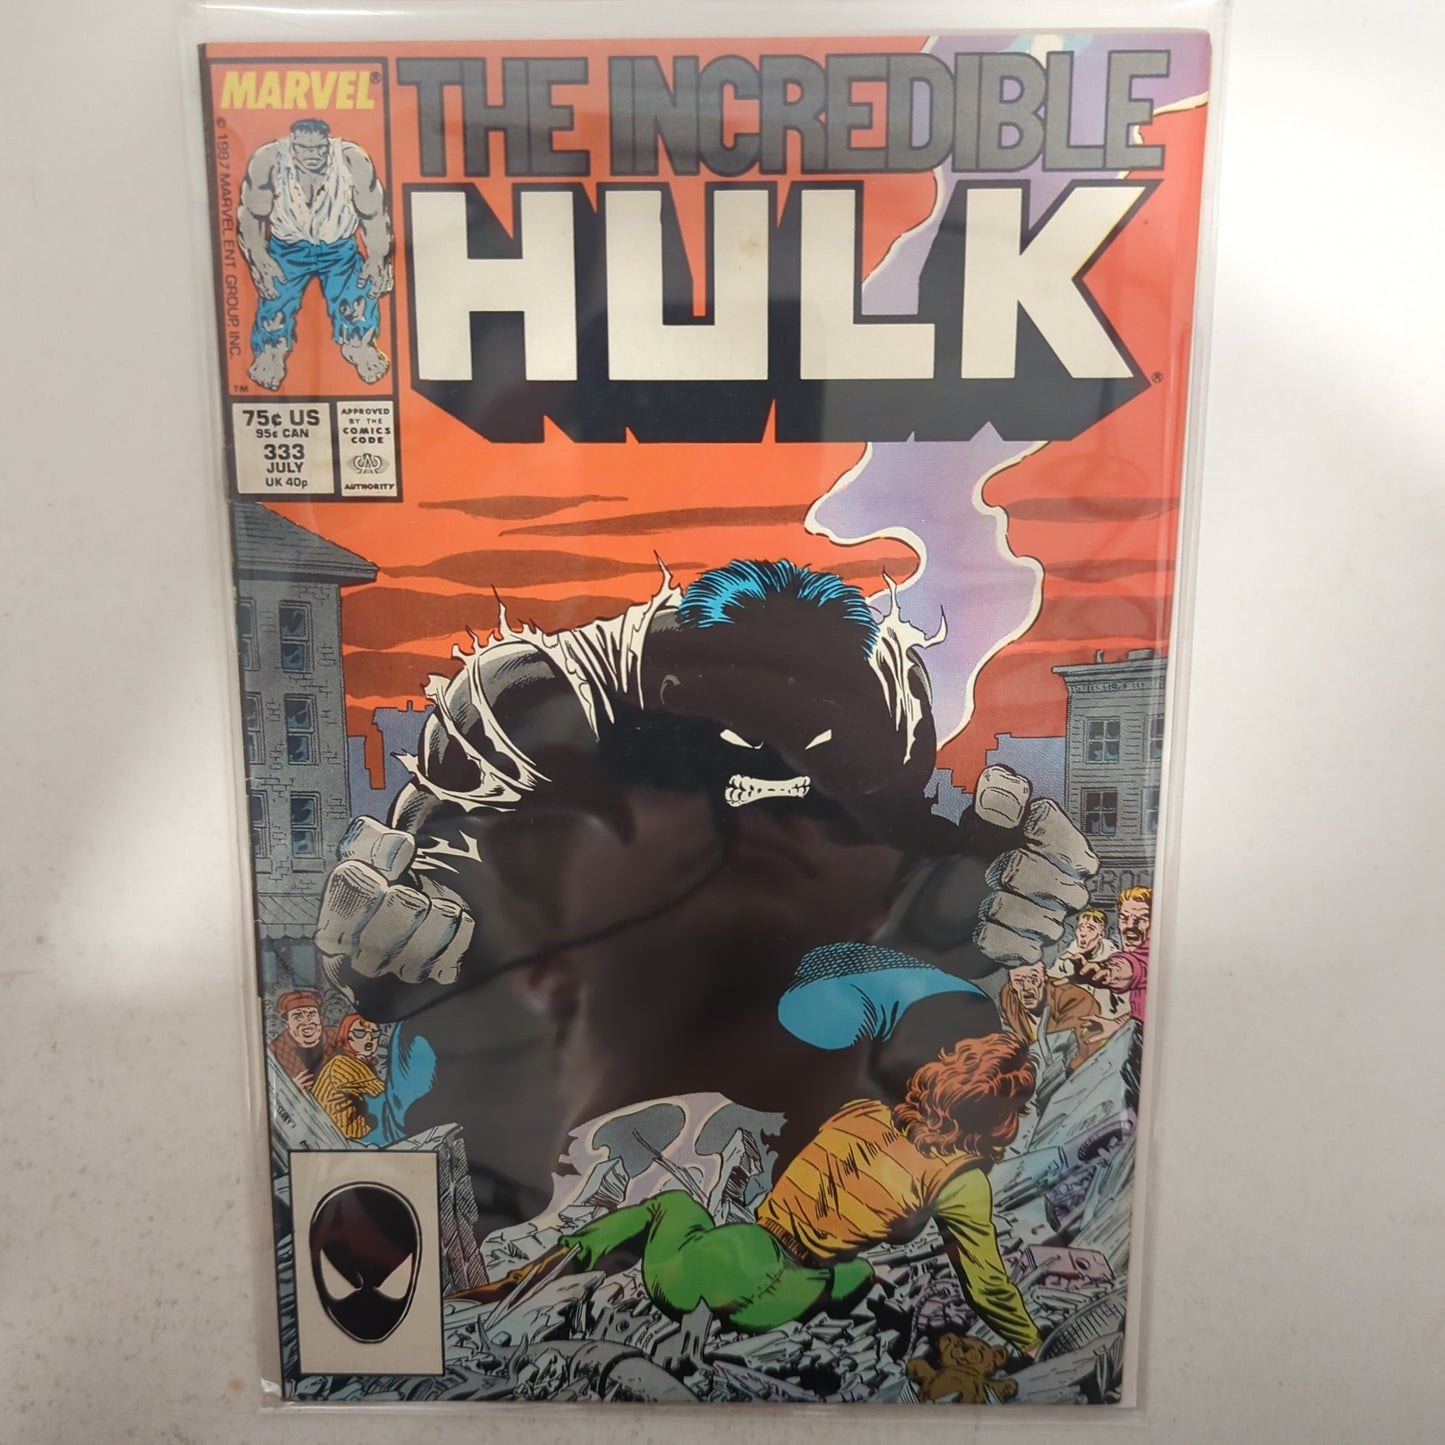 The Incredible Hulk #333